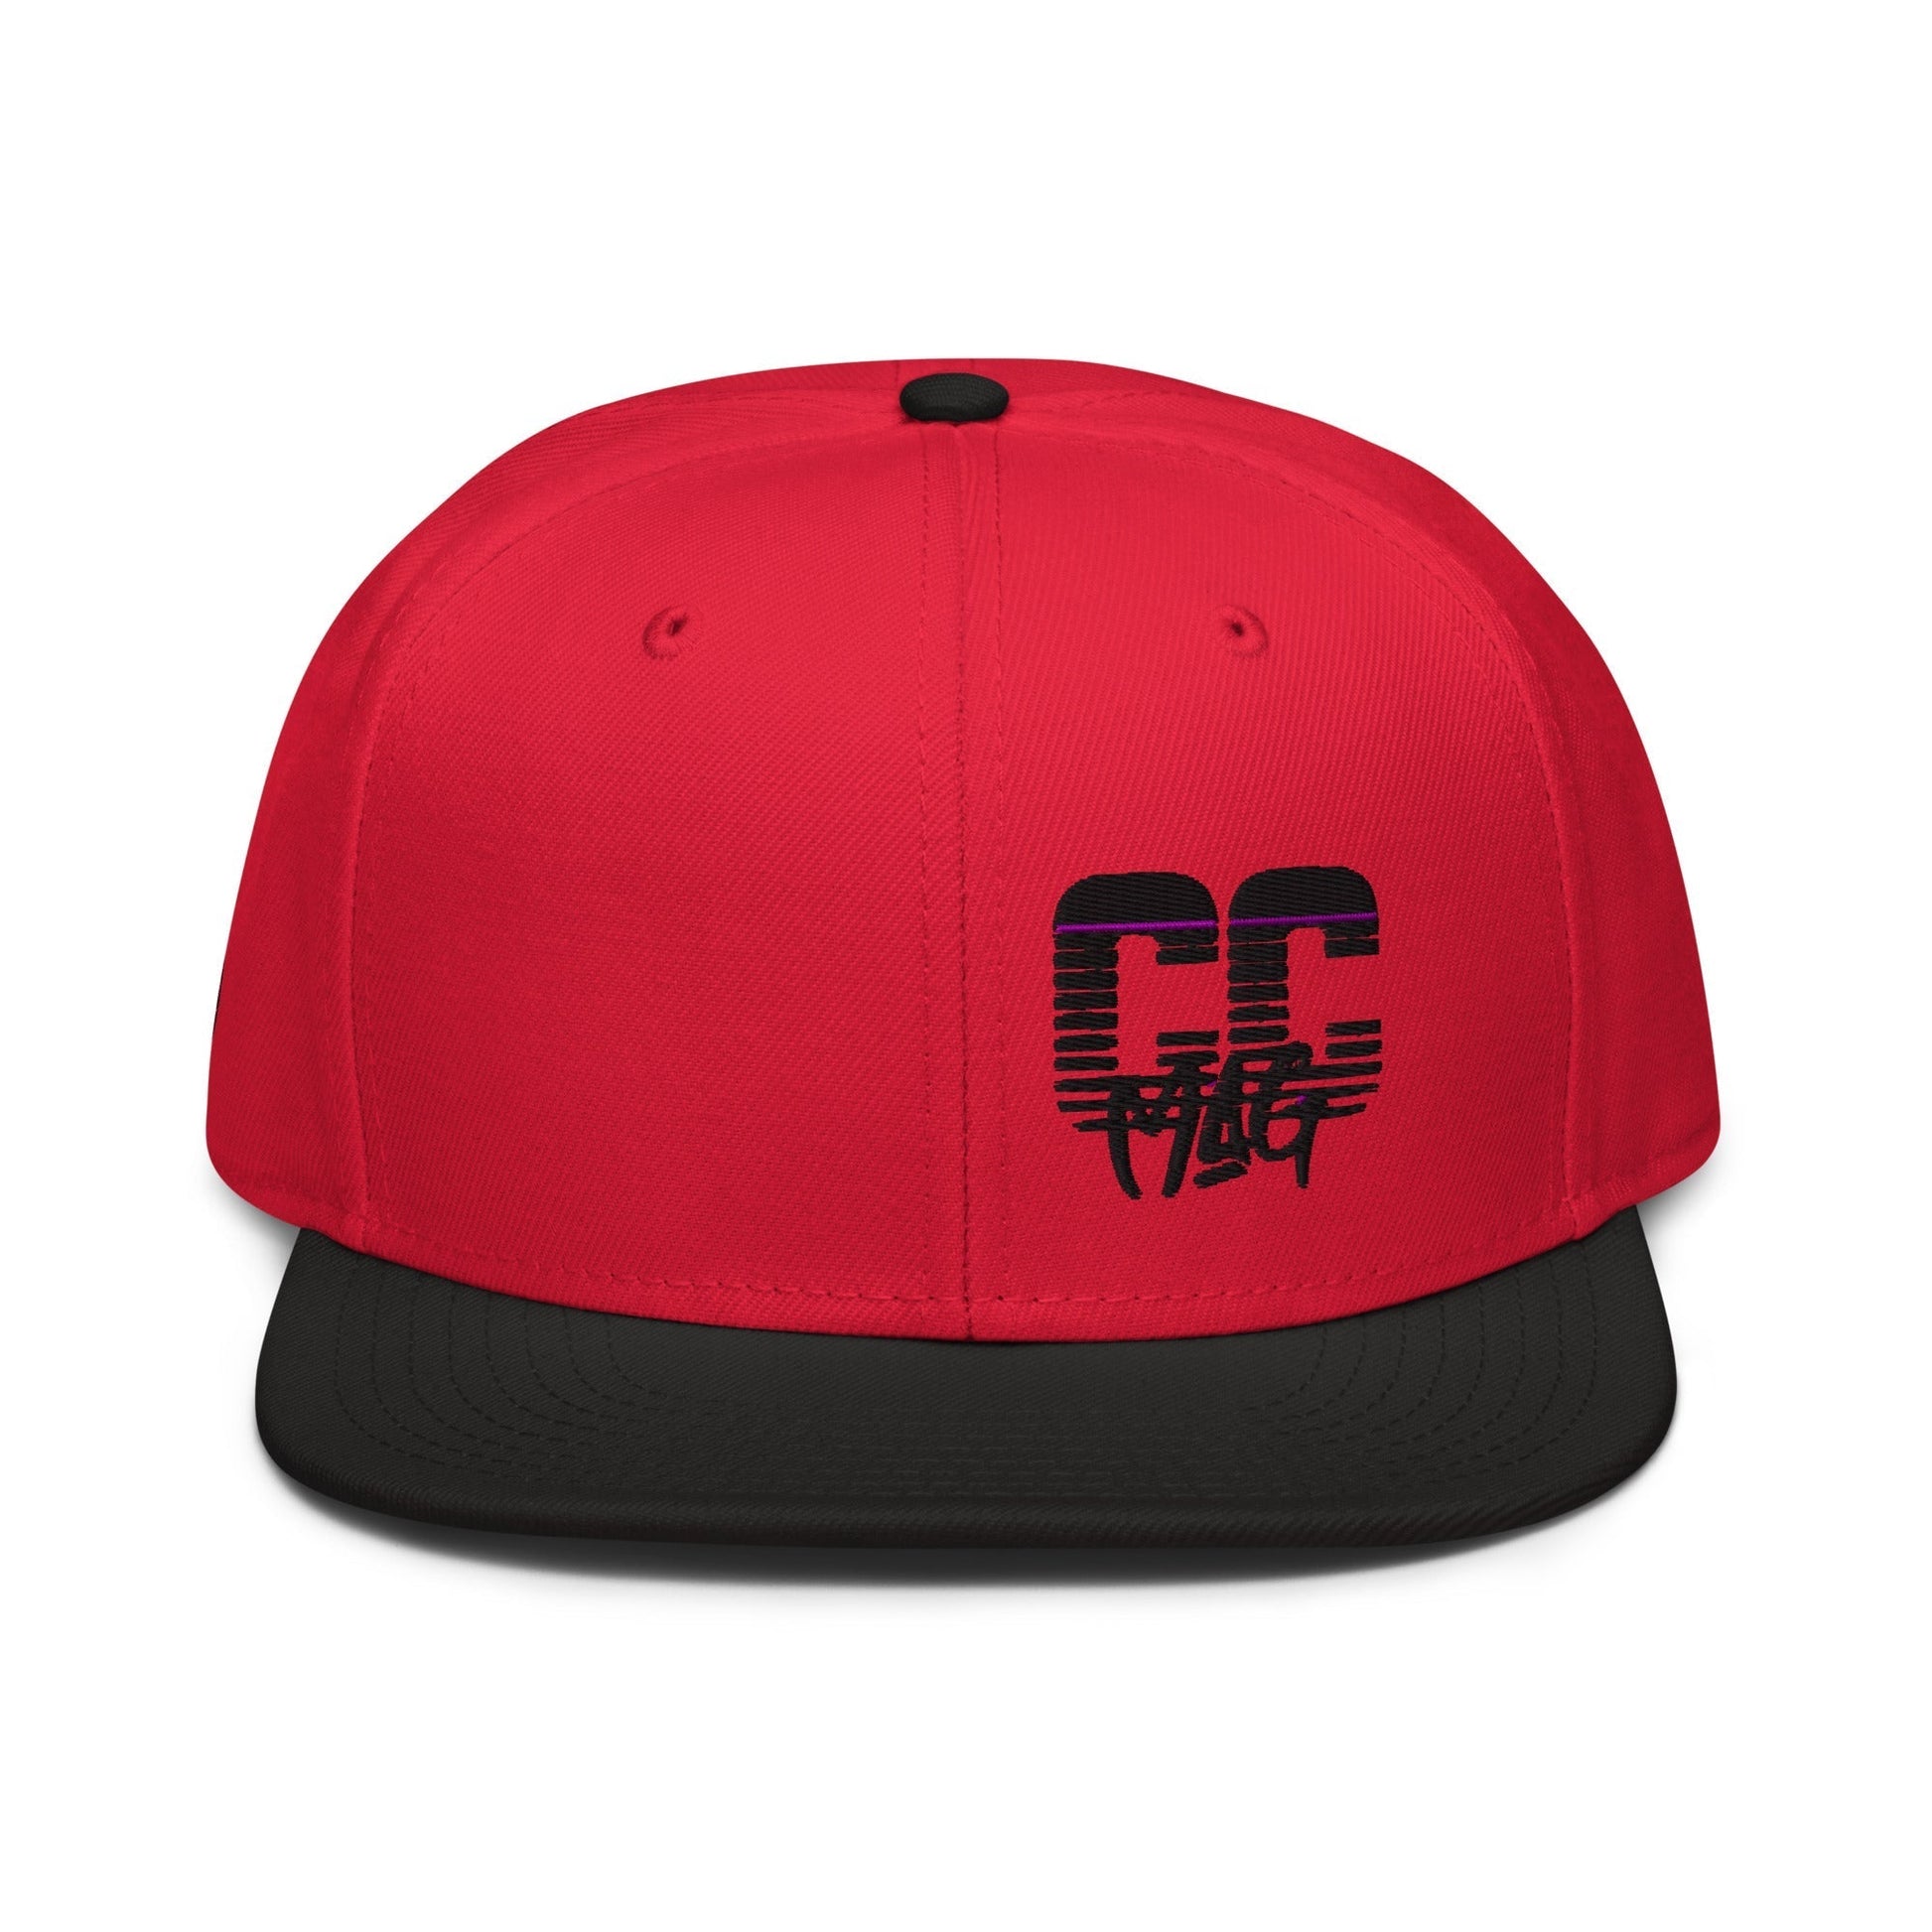 CC Mag Black Logo Culture – Hat Apparel Snapback Cruise